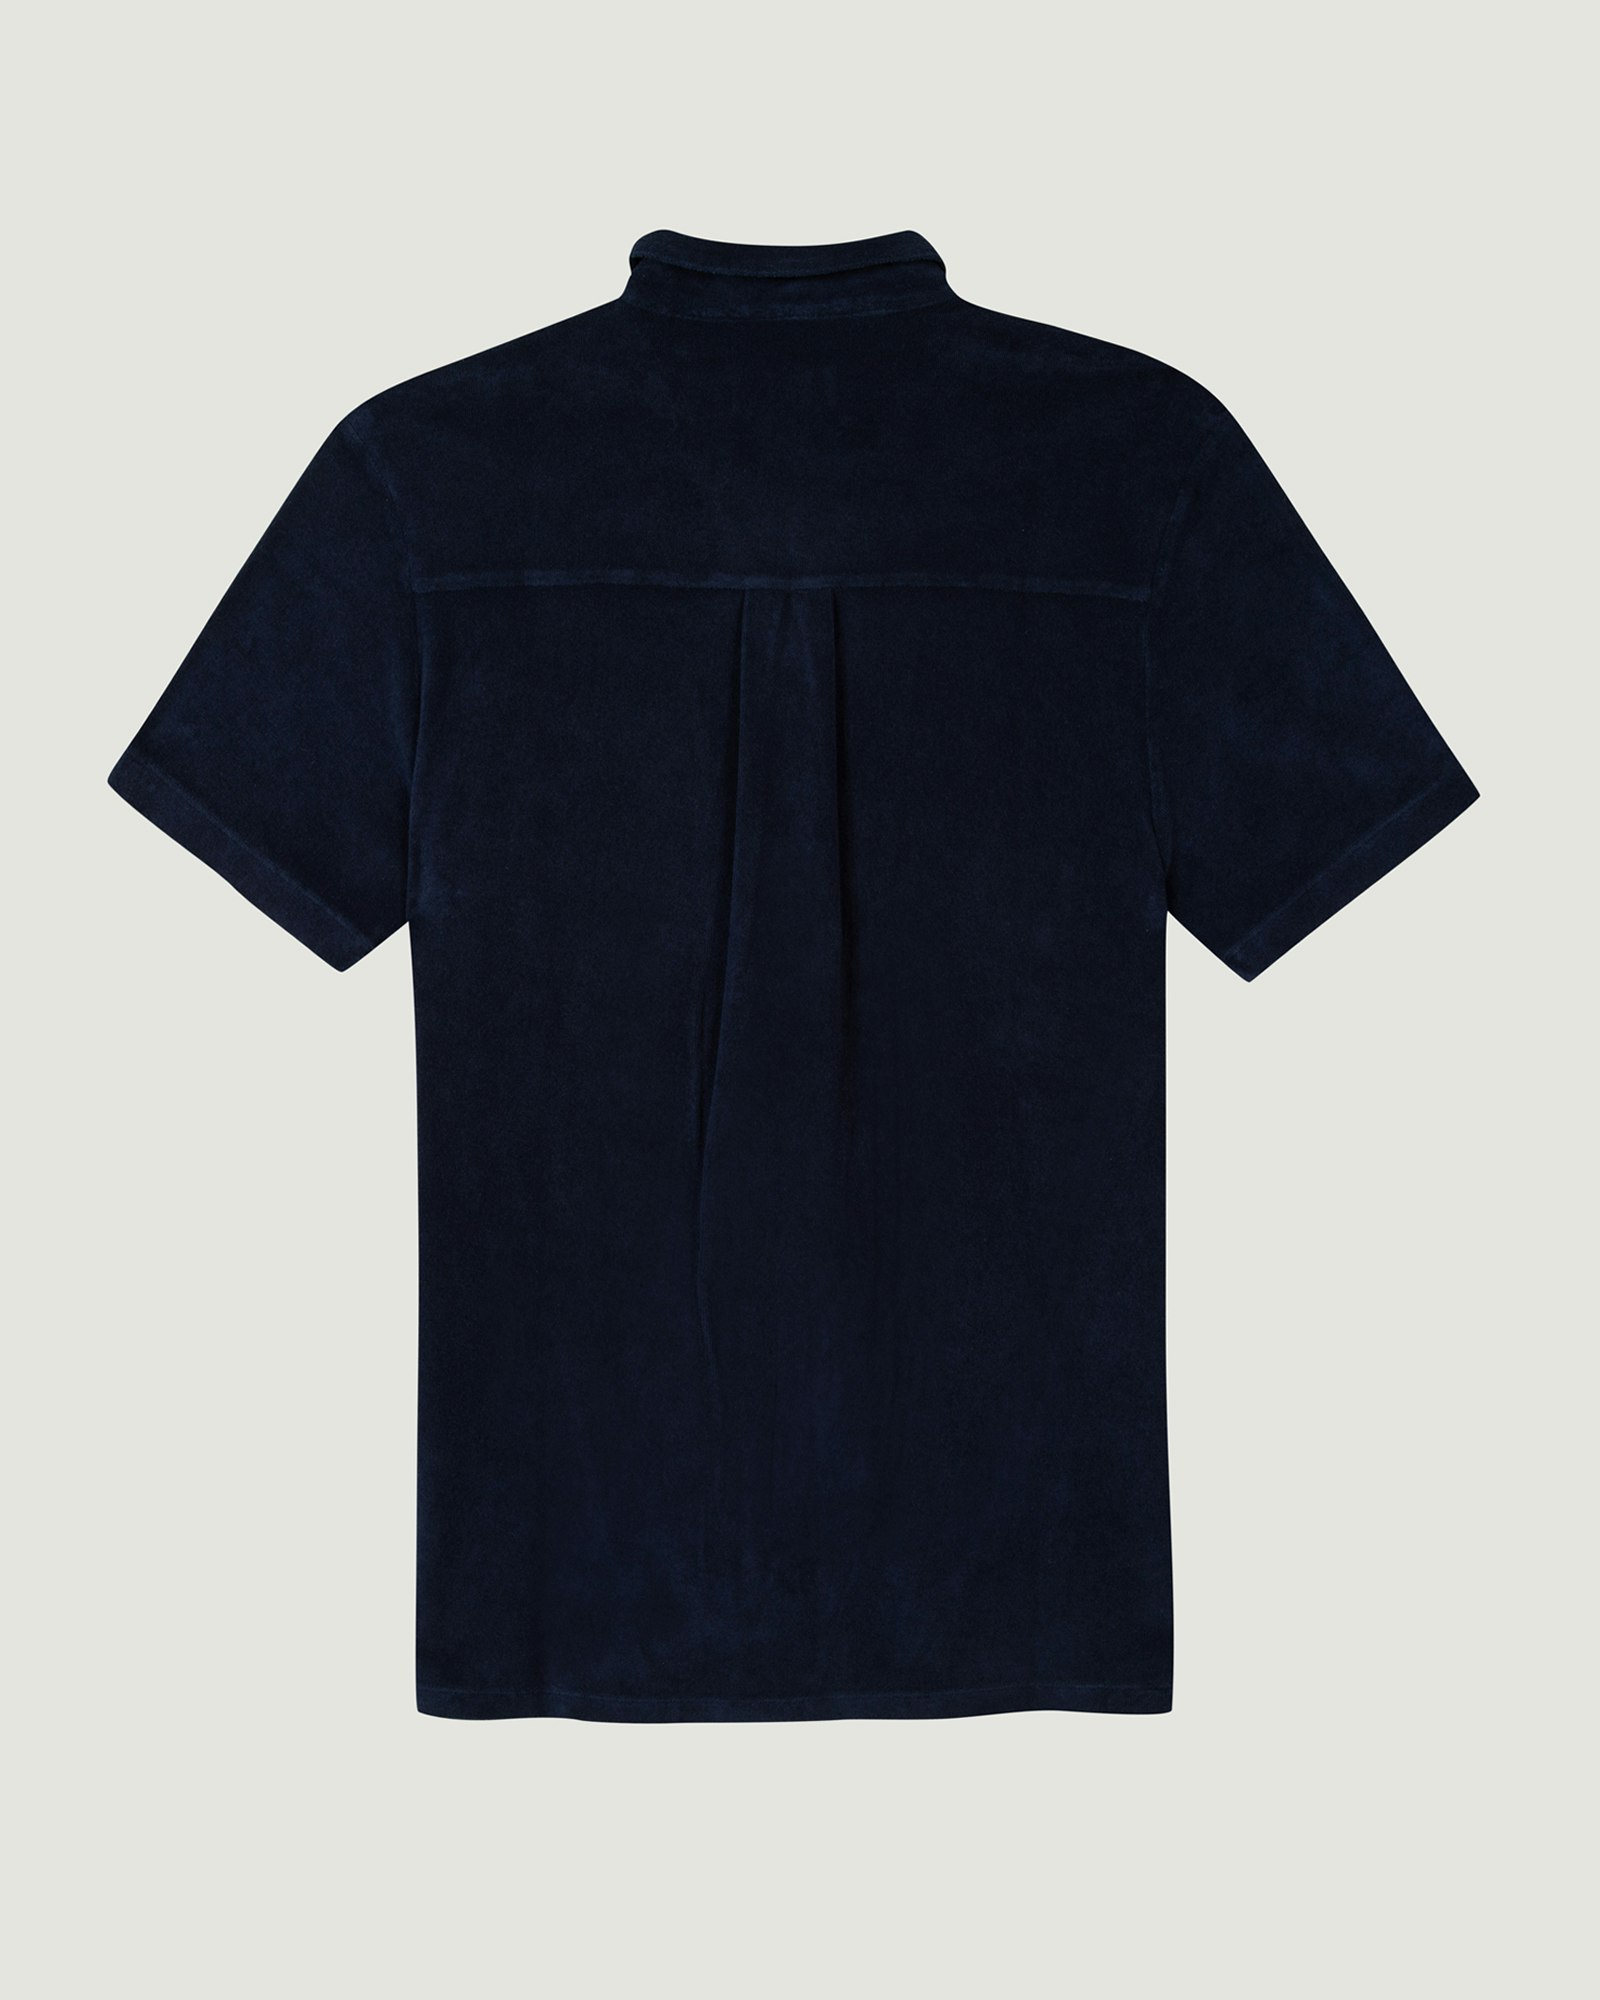 Maison Labiche - Devoured Terry Cloth Germain Shirt, Dk Navy